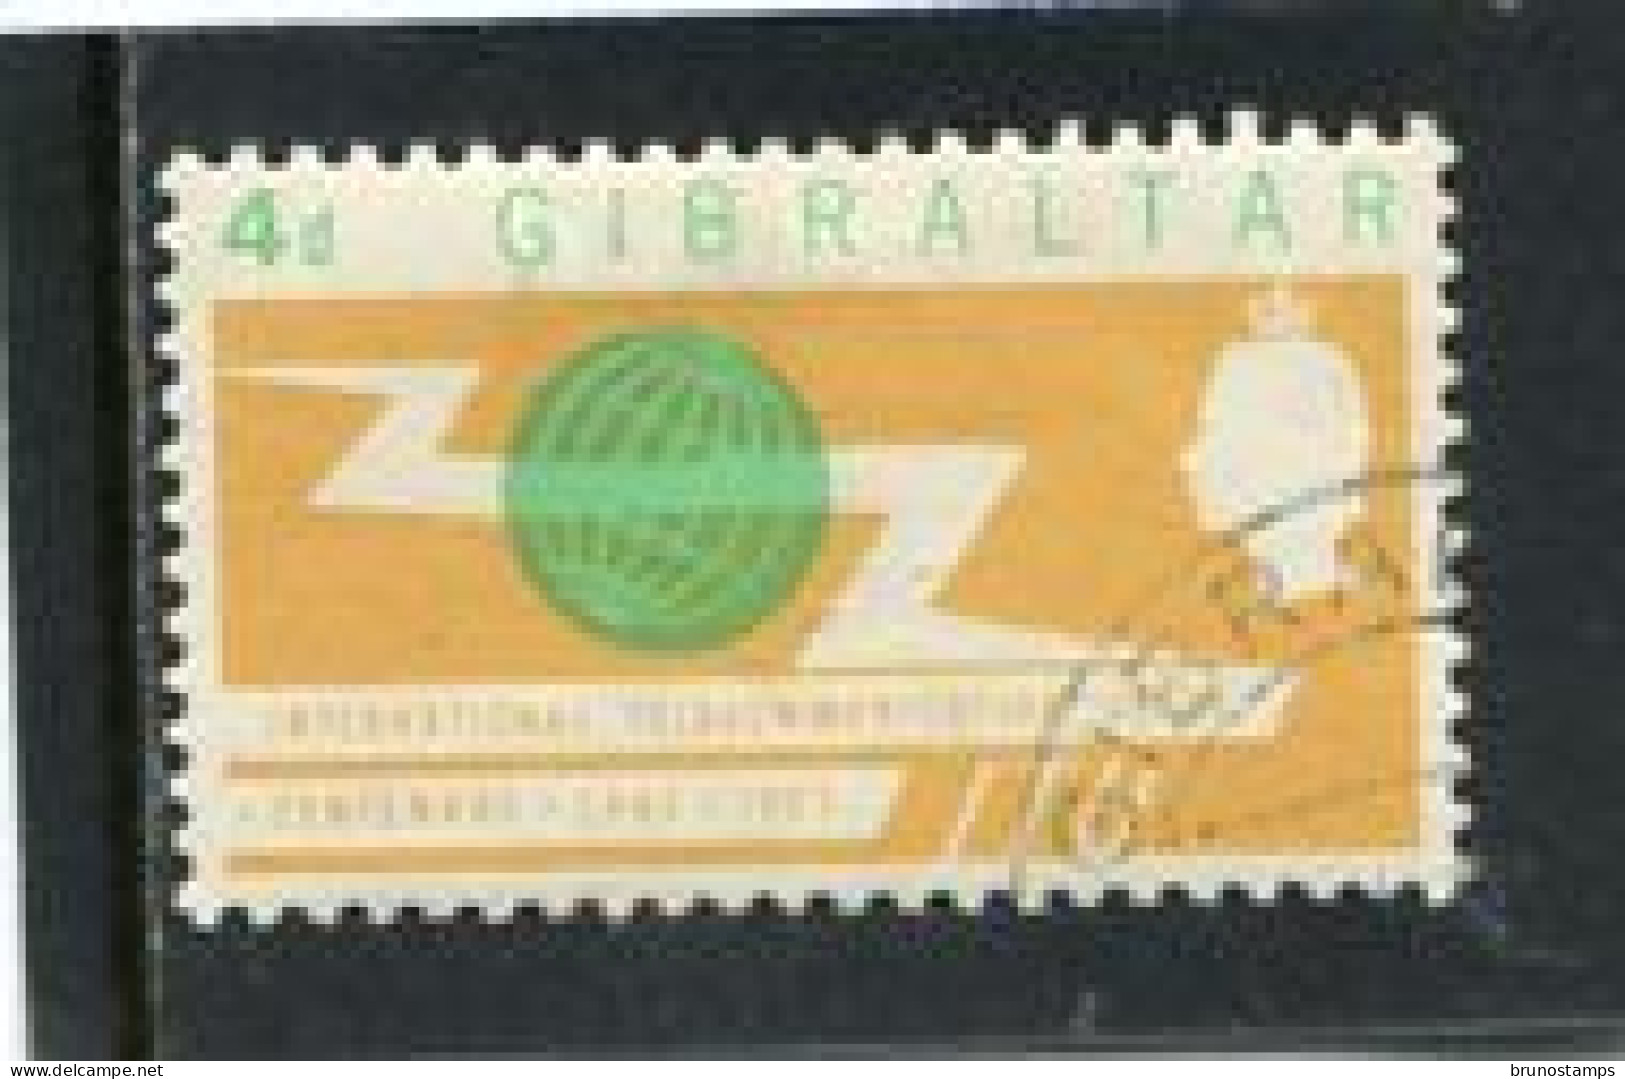 GIBRALTAR - 1965  4d  ITU  FINE USED - Gibraltar